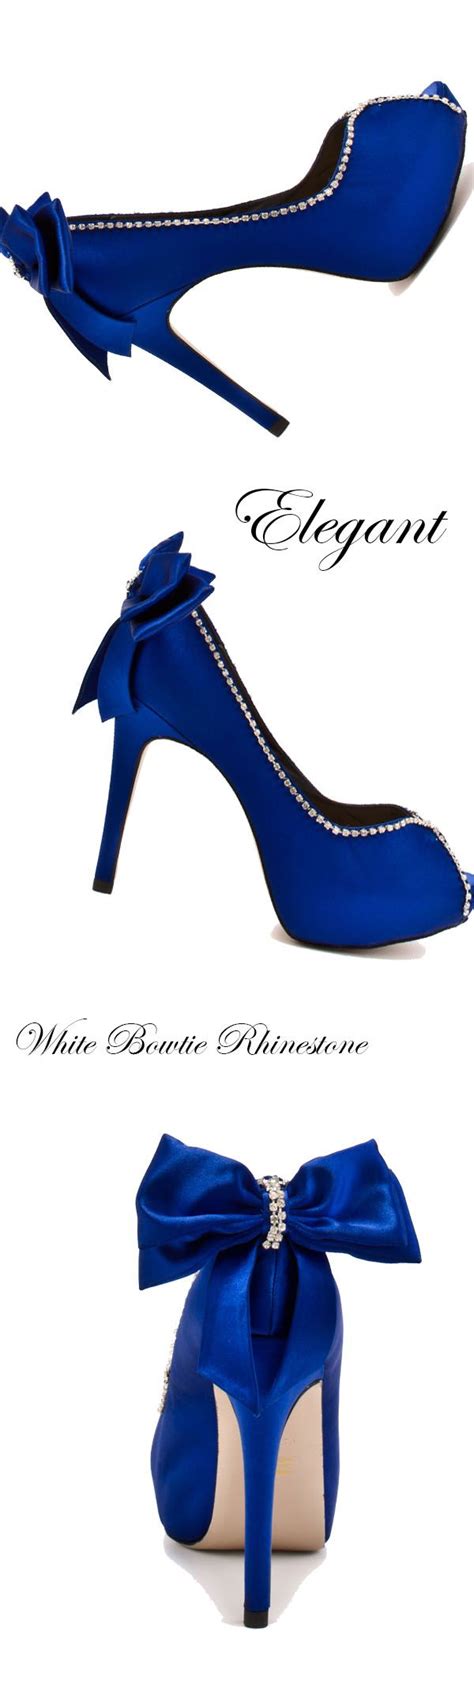 elegant white bowtie rhinestone decoration platform high heel shoes with images heels high